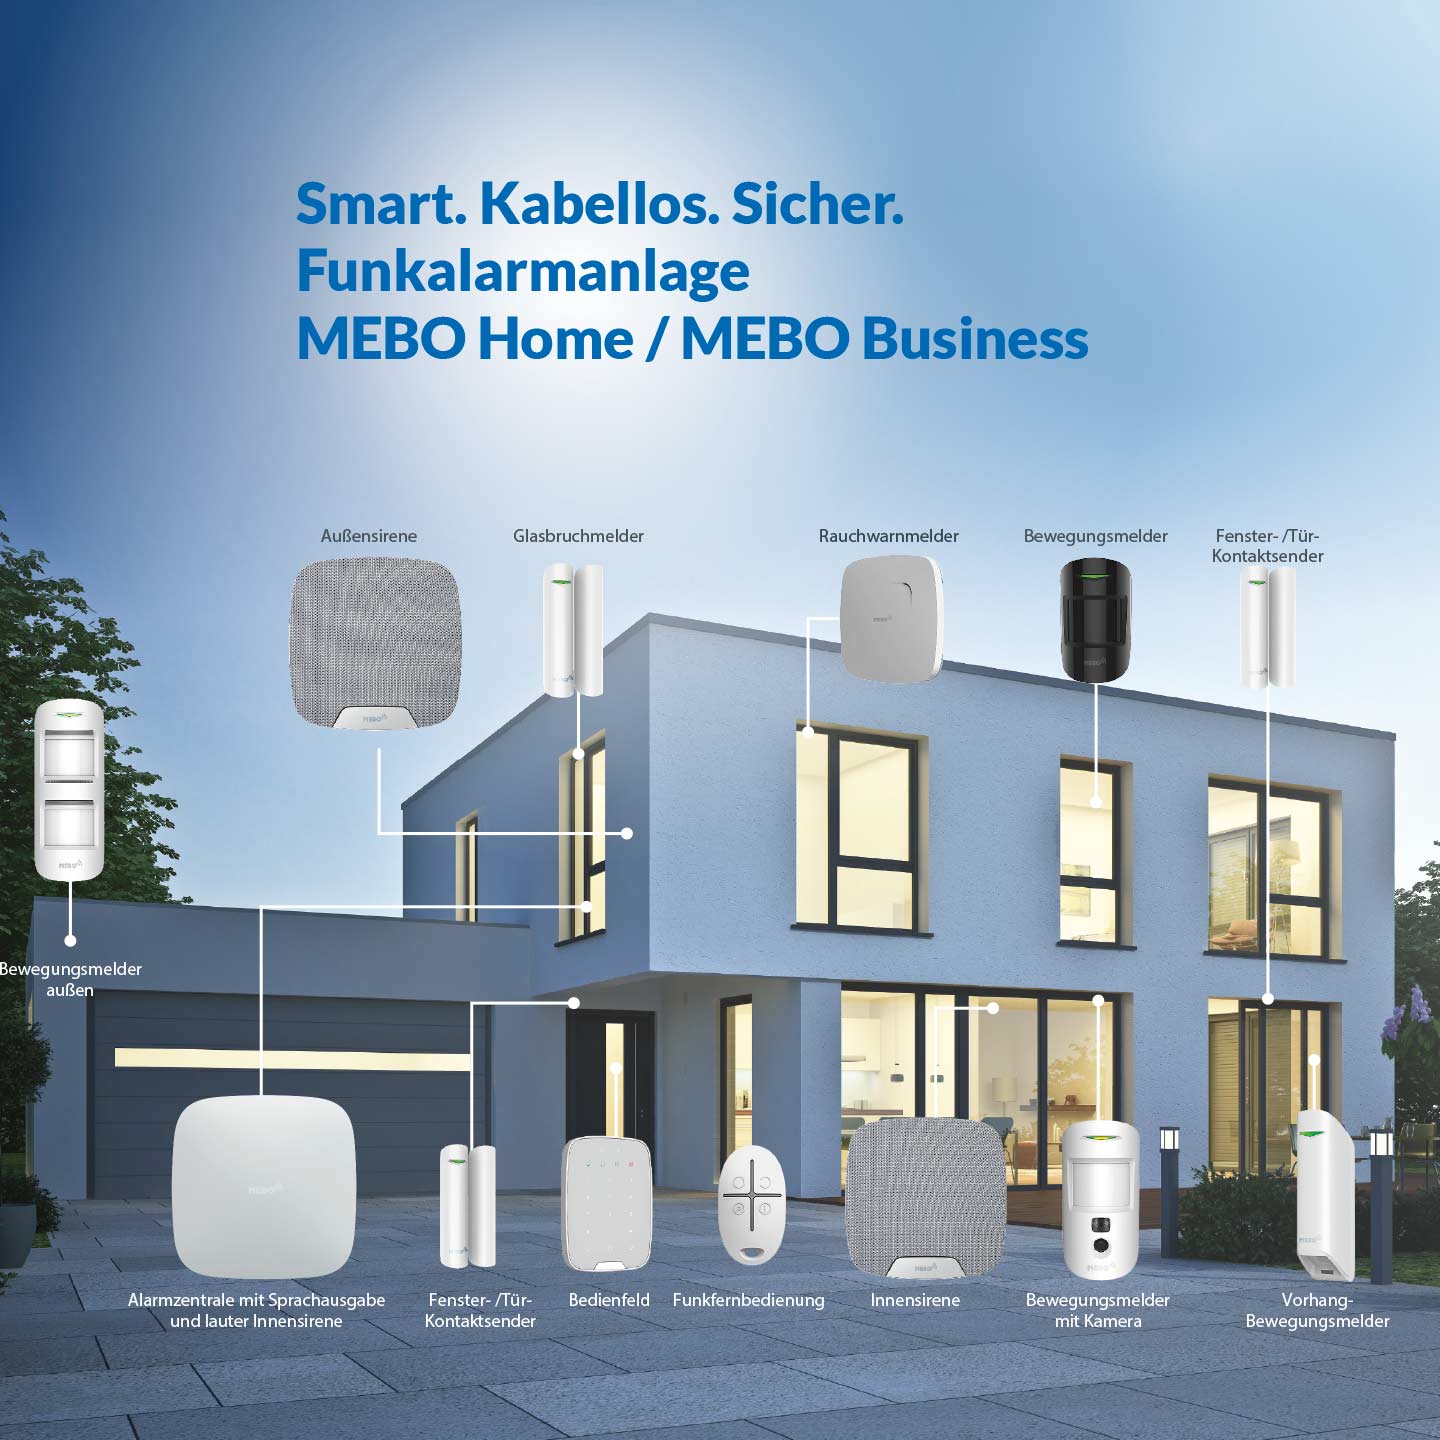 MEBO Home/MEBO Business Funkalarmanlage Komponneten am Objekt